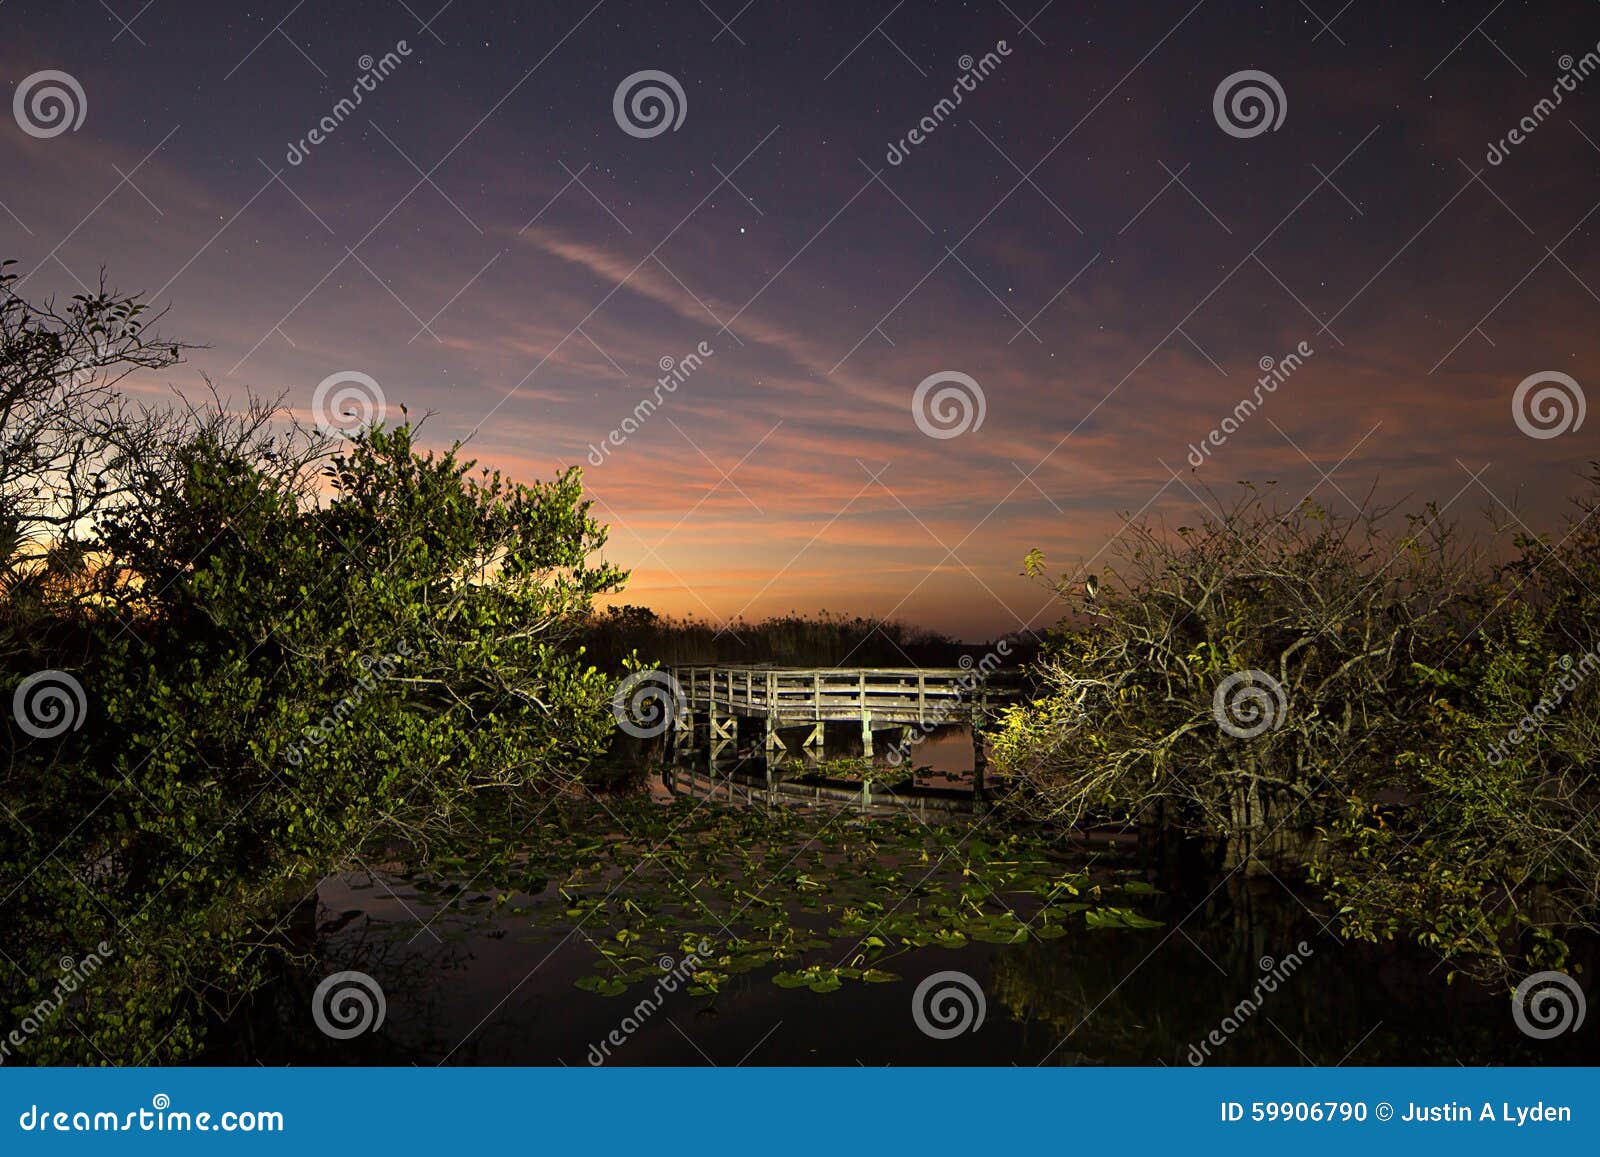 everglades sunset - anhinga at twighlight